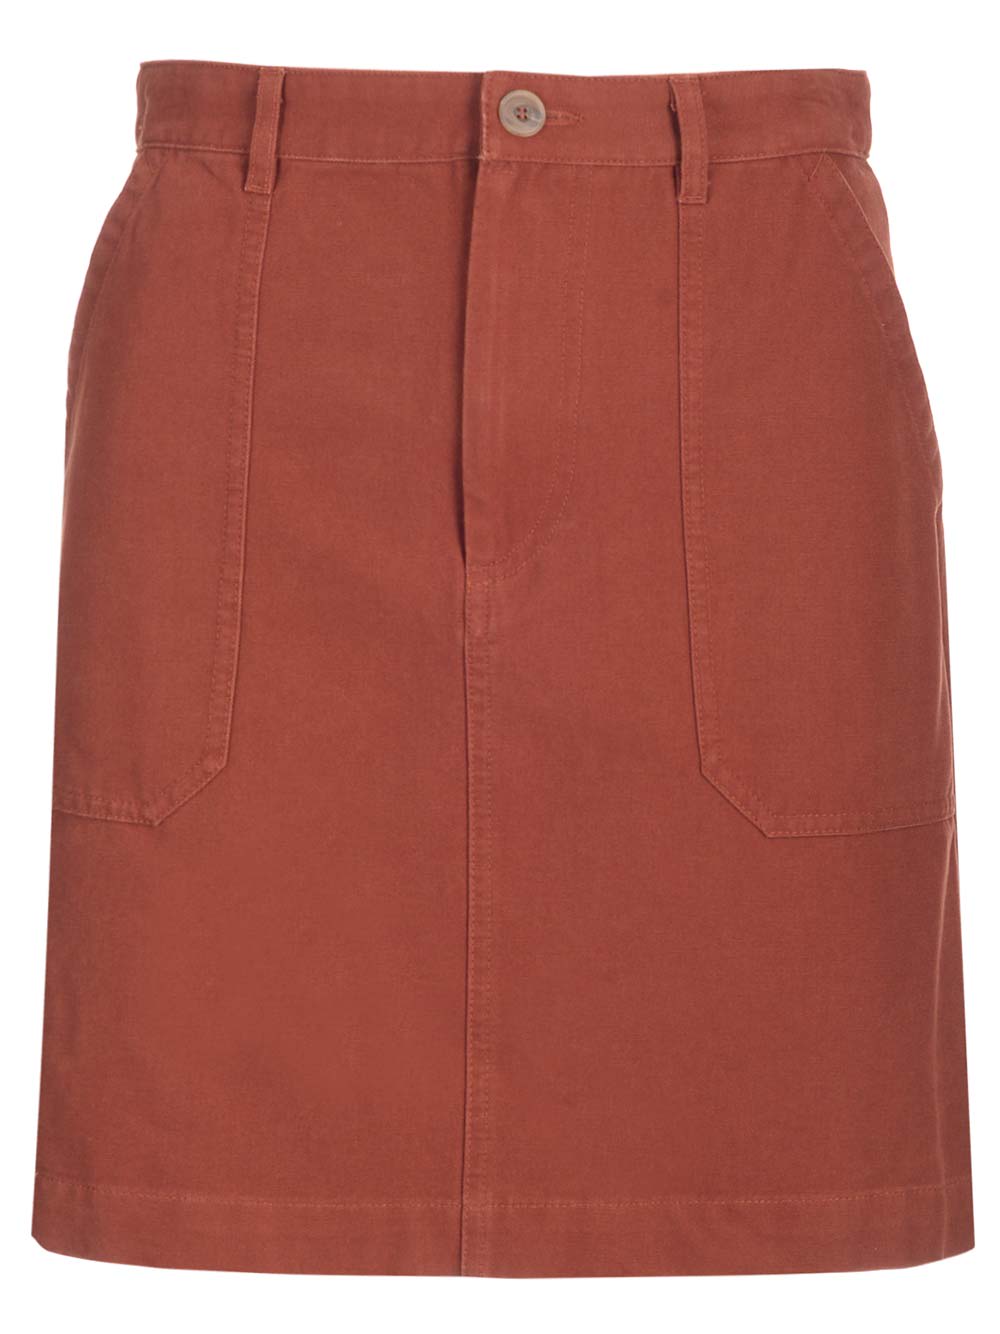 Apc Brick Red L Skirt